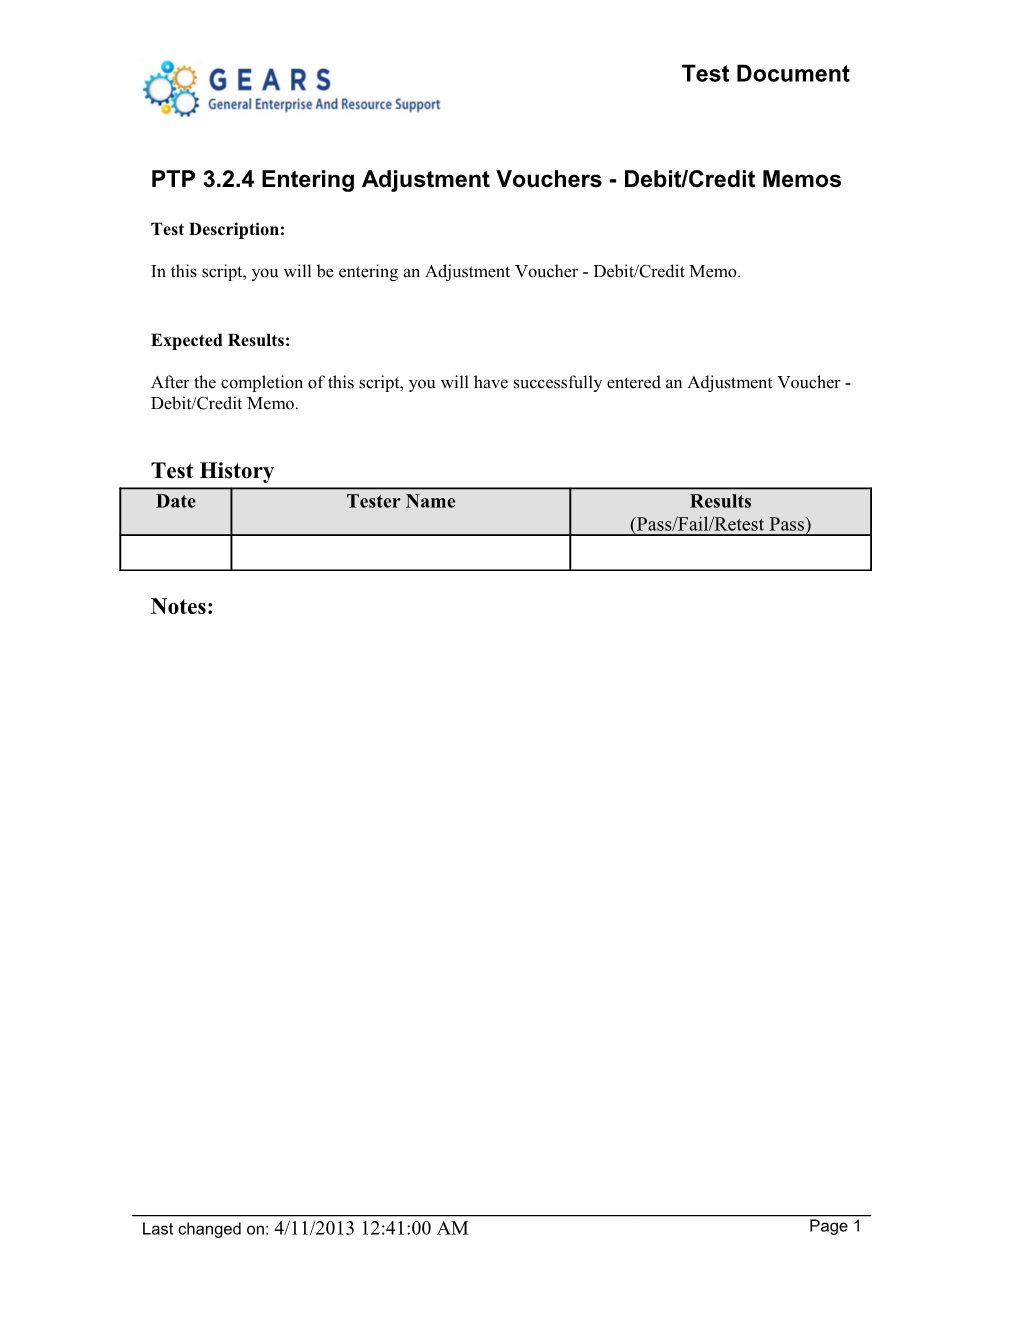 PTP 3.2.4 Entering Adjustment Vouchers - Debit/Credit Memos